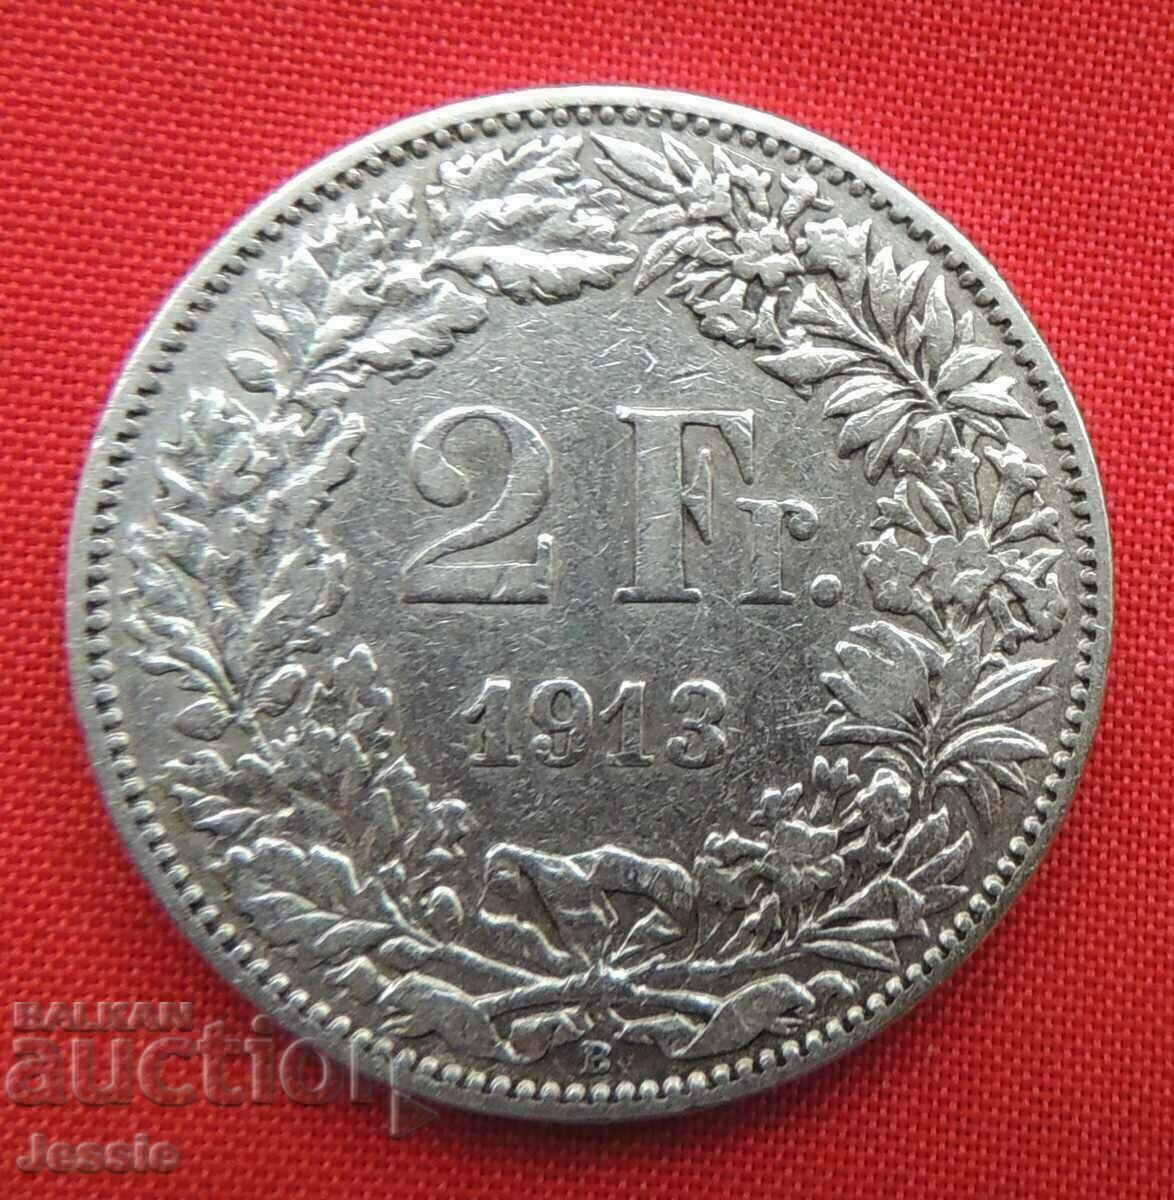 2 Francs 1913 B Switzerland Silver